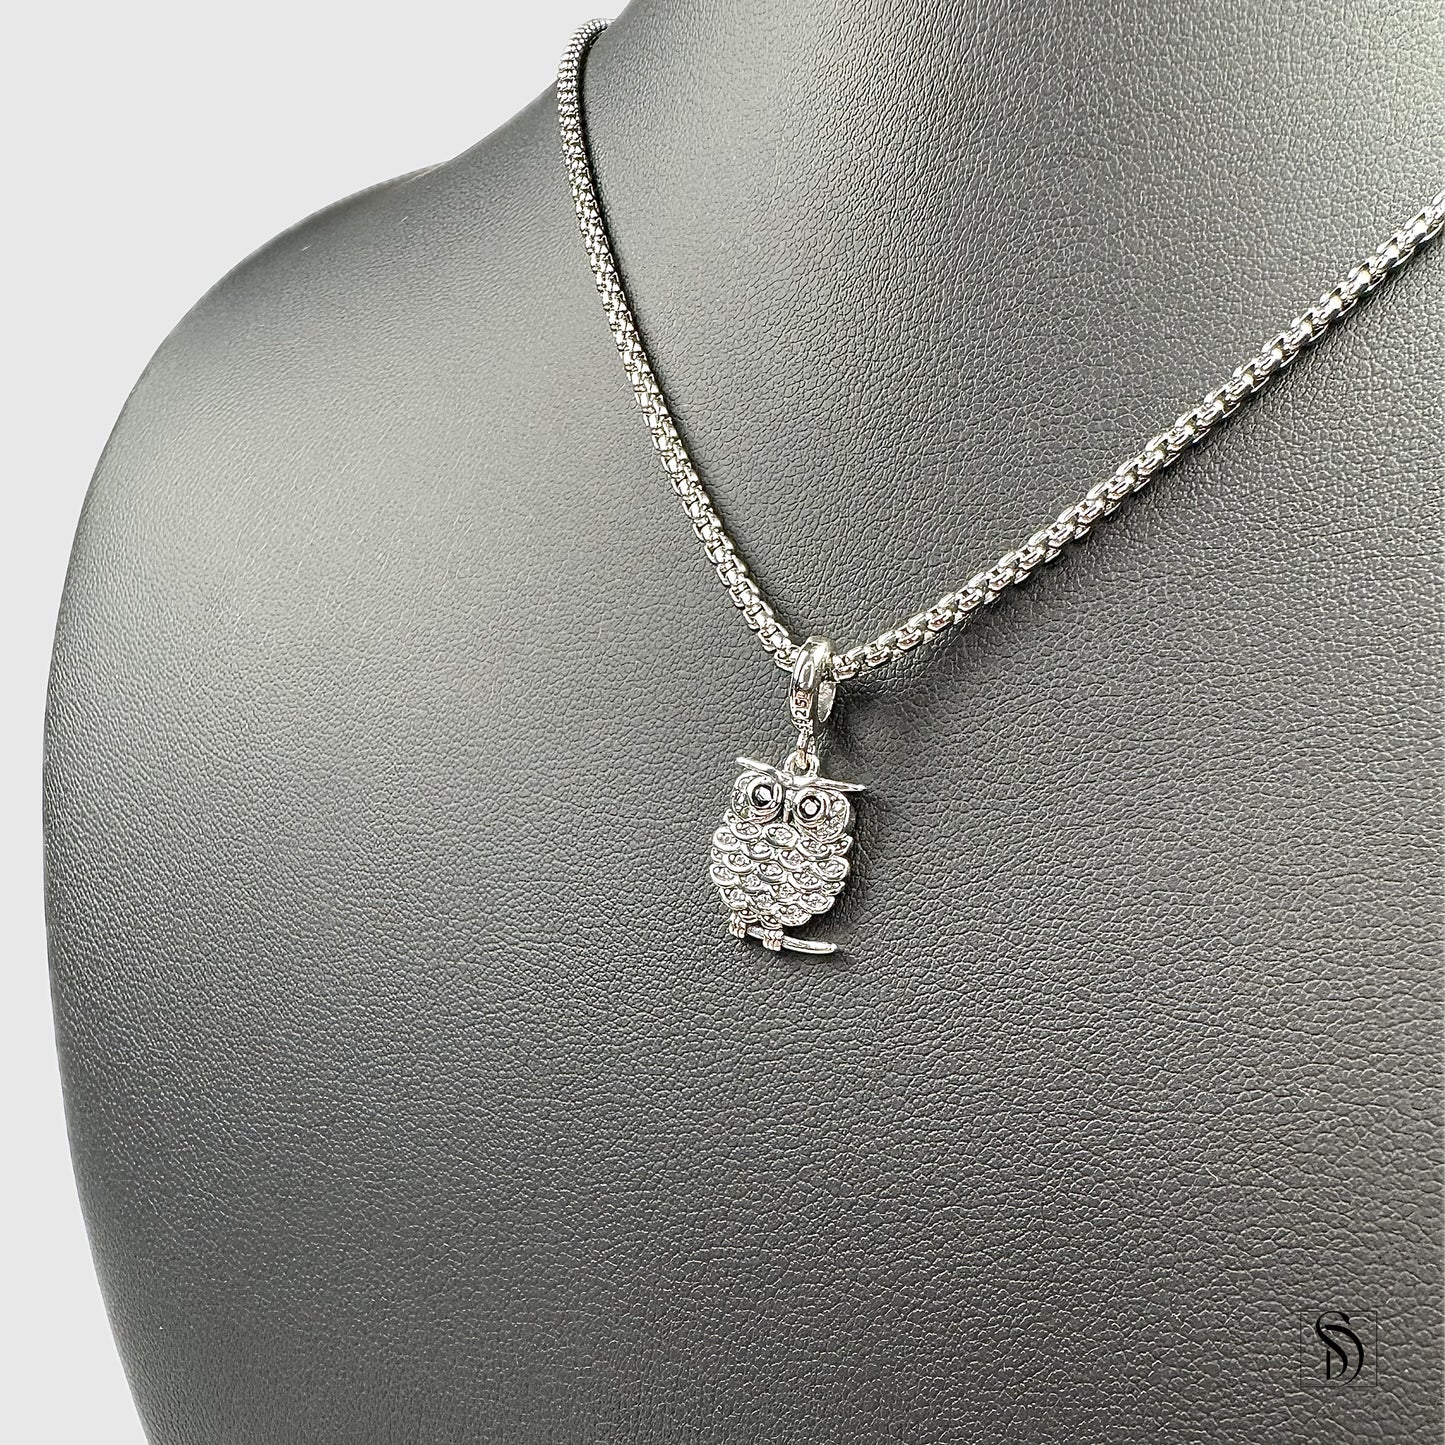 Silver Owl Gemstones Pendant Necklace